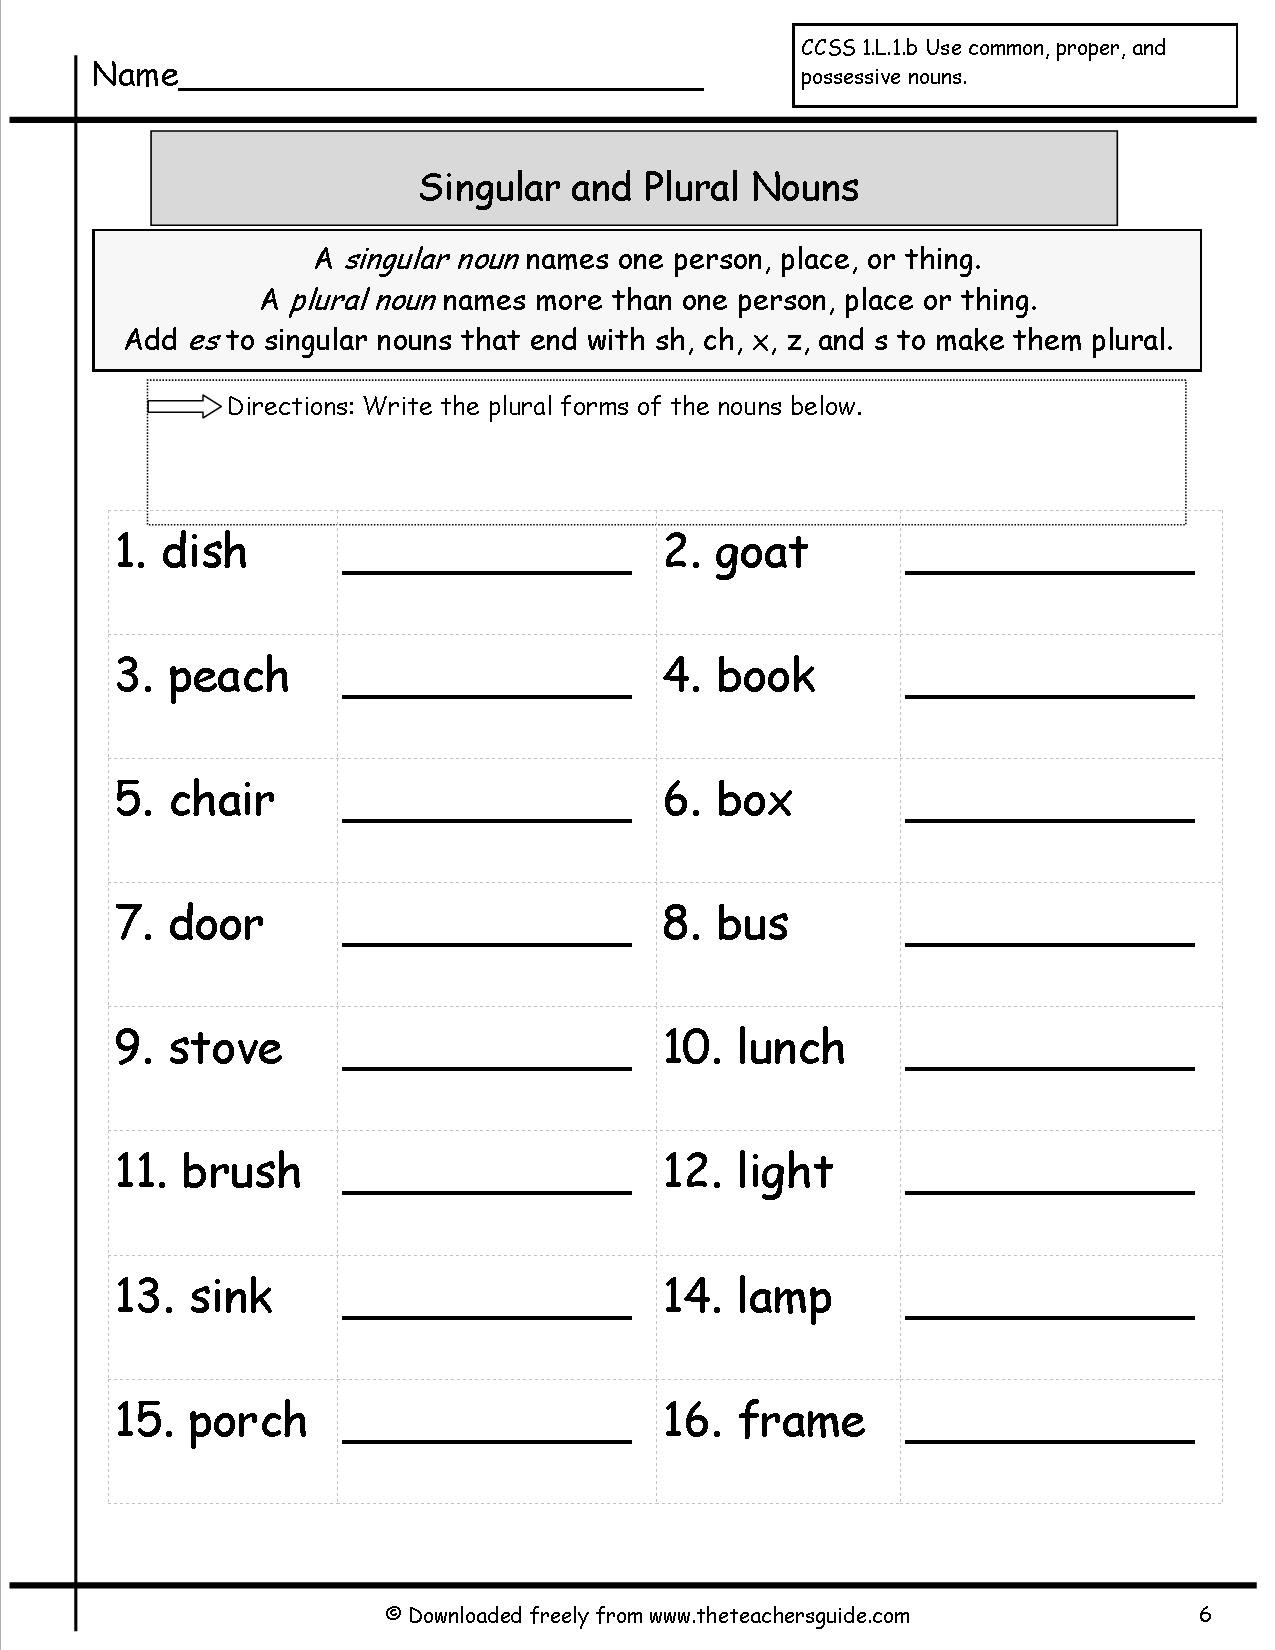 11-present-tense-verbs-worksheets-3rd-grade-worksheeto